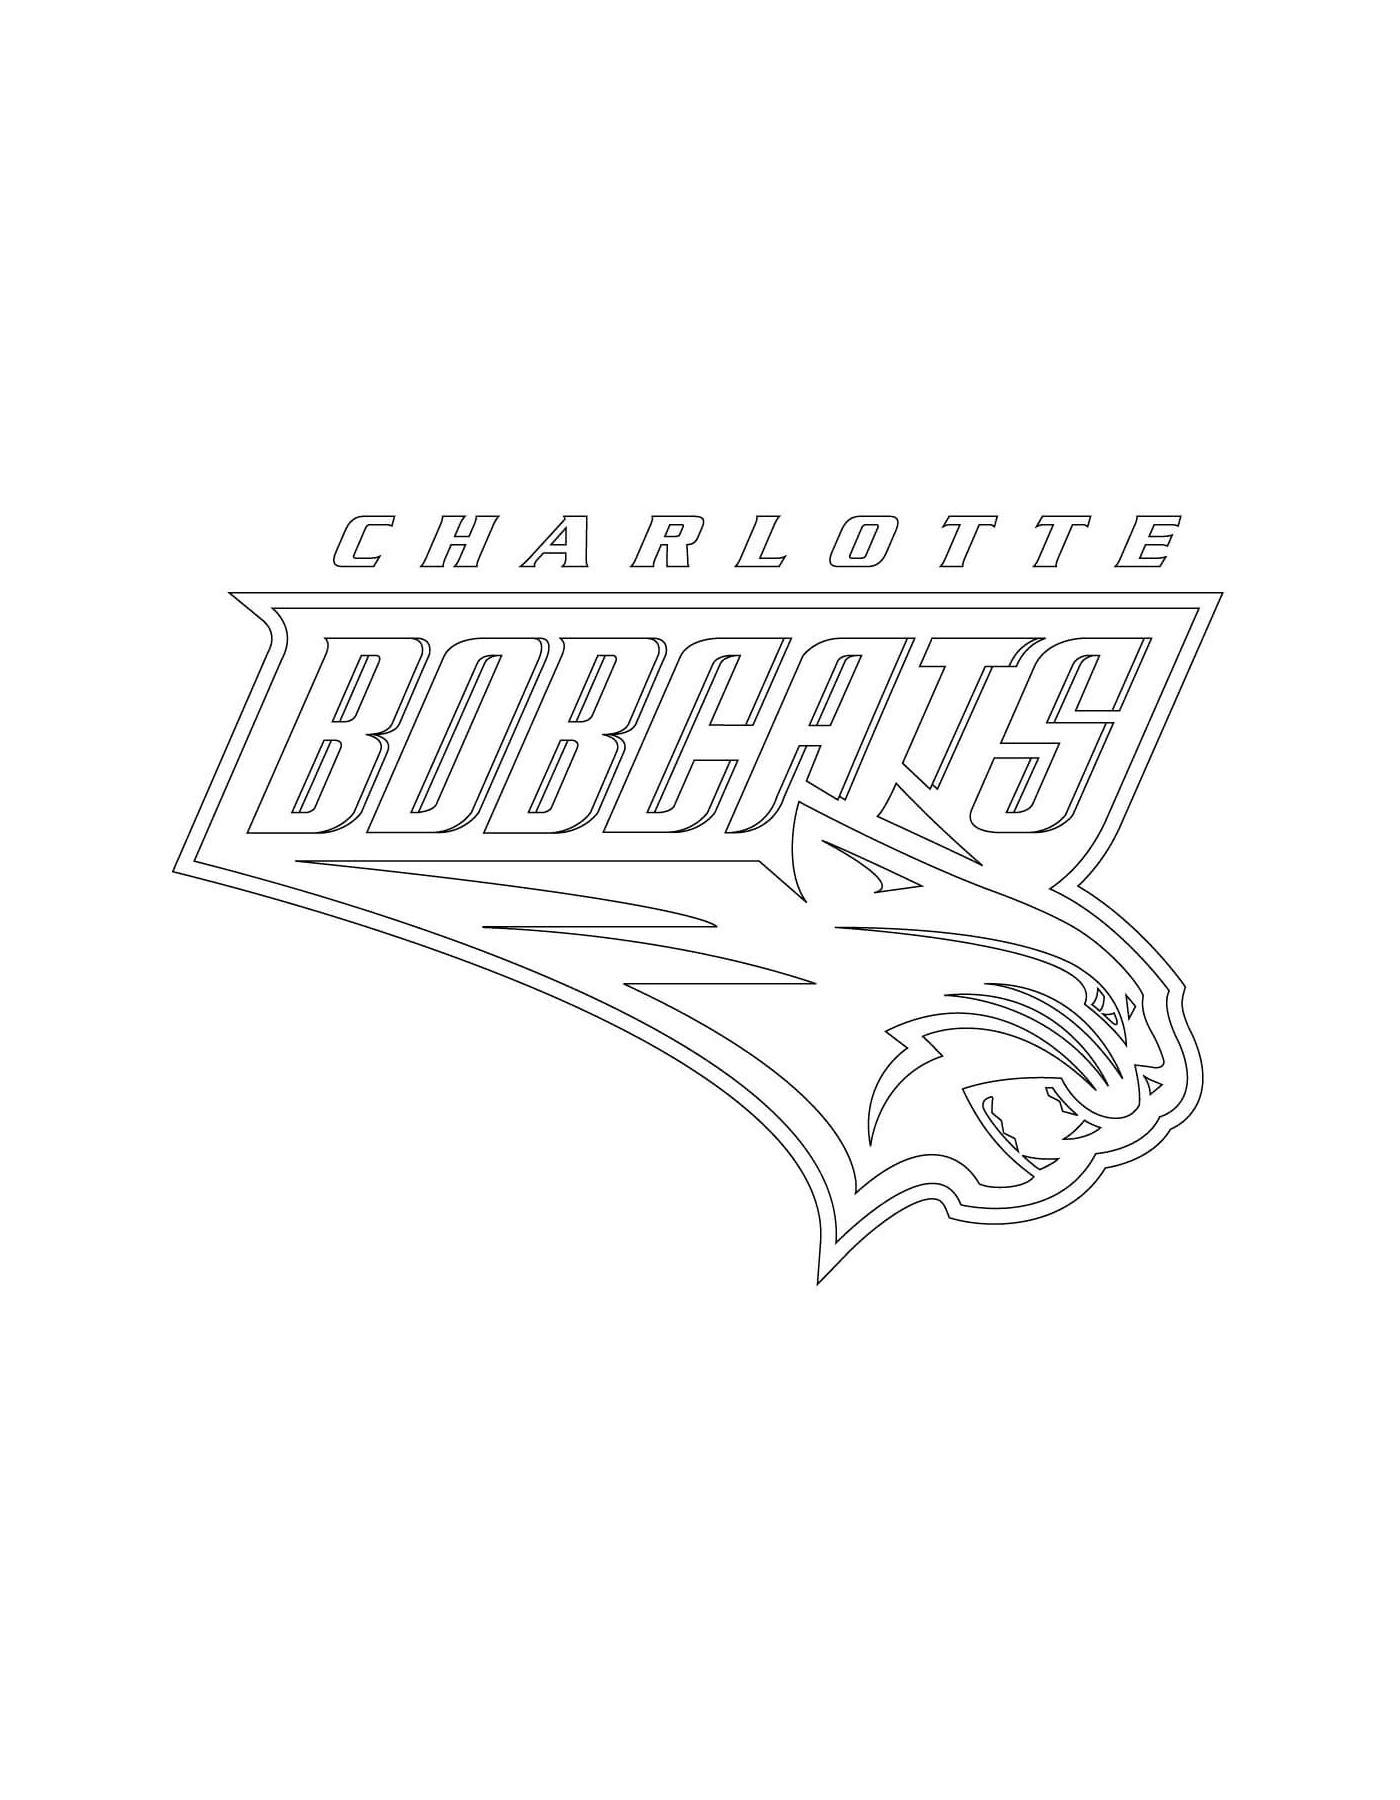   Le logo des Charlotte Bobcats de la NBA 